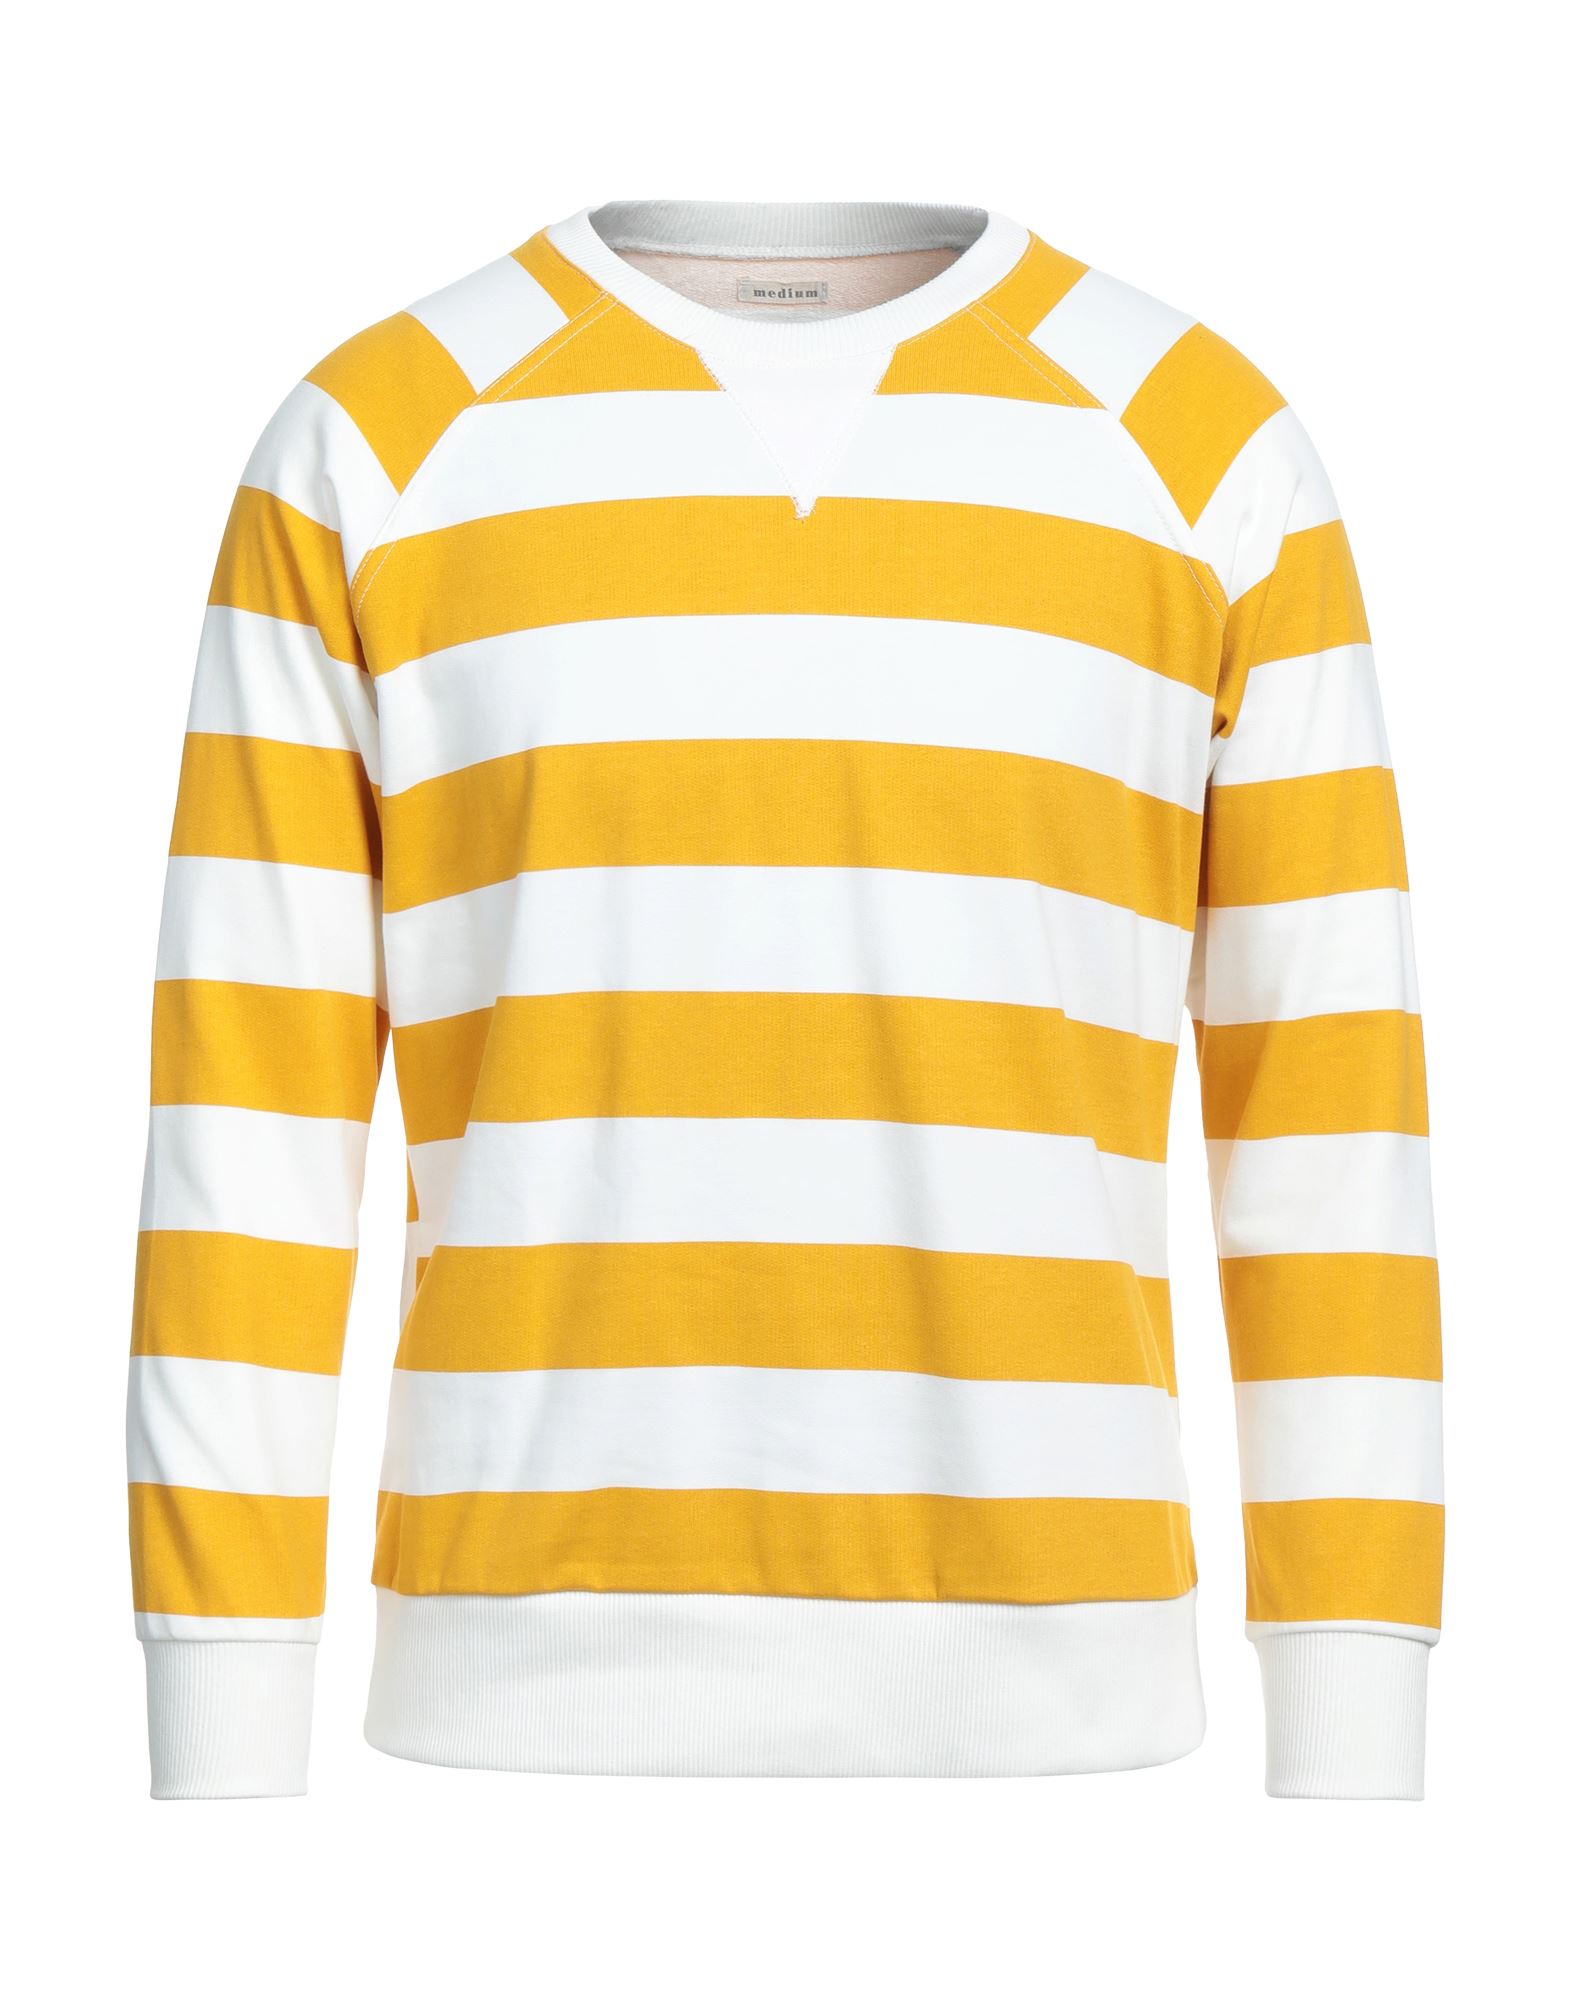 Attrezzeria 33 Sweatshirts In Yellow